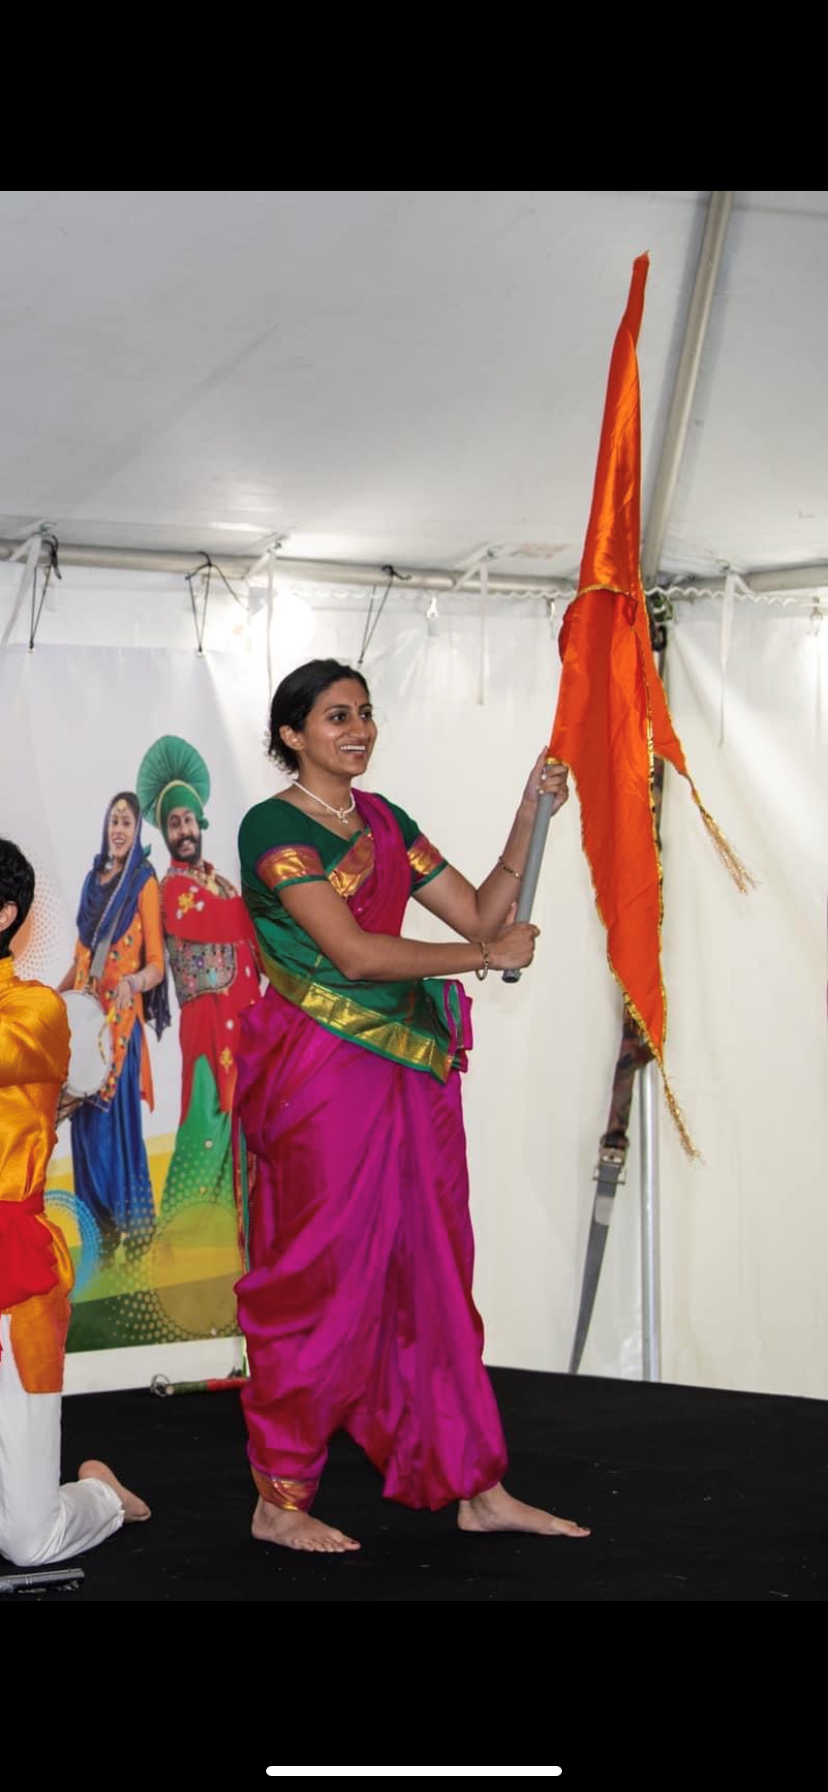  Tejal Patki danced at the Indian ambassador's house this summer. 